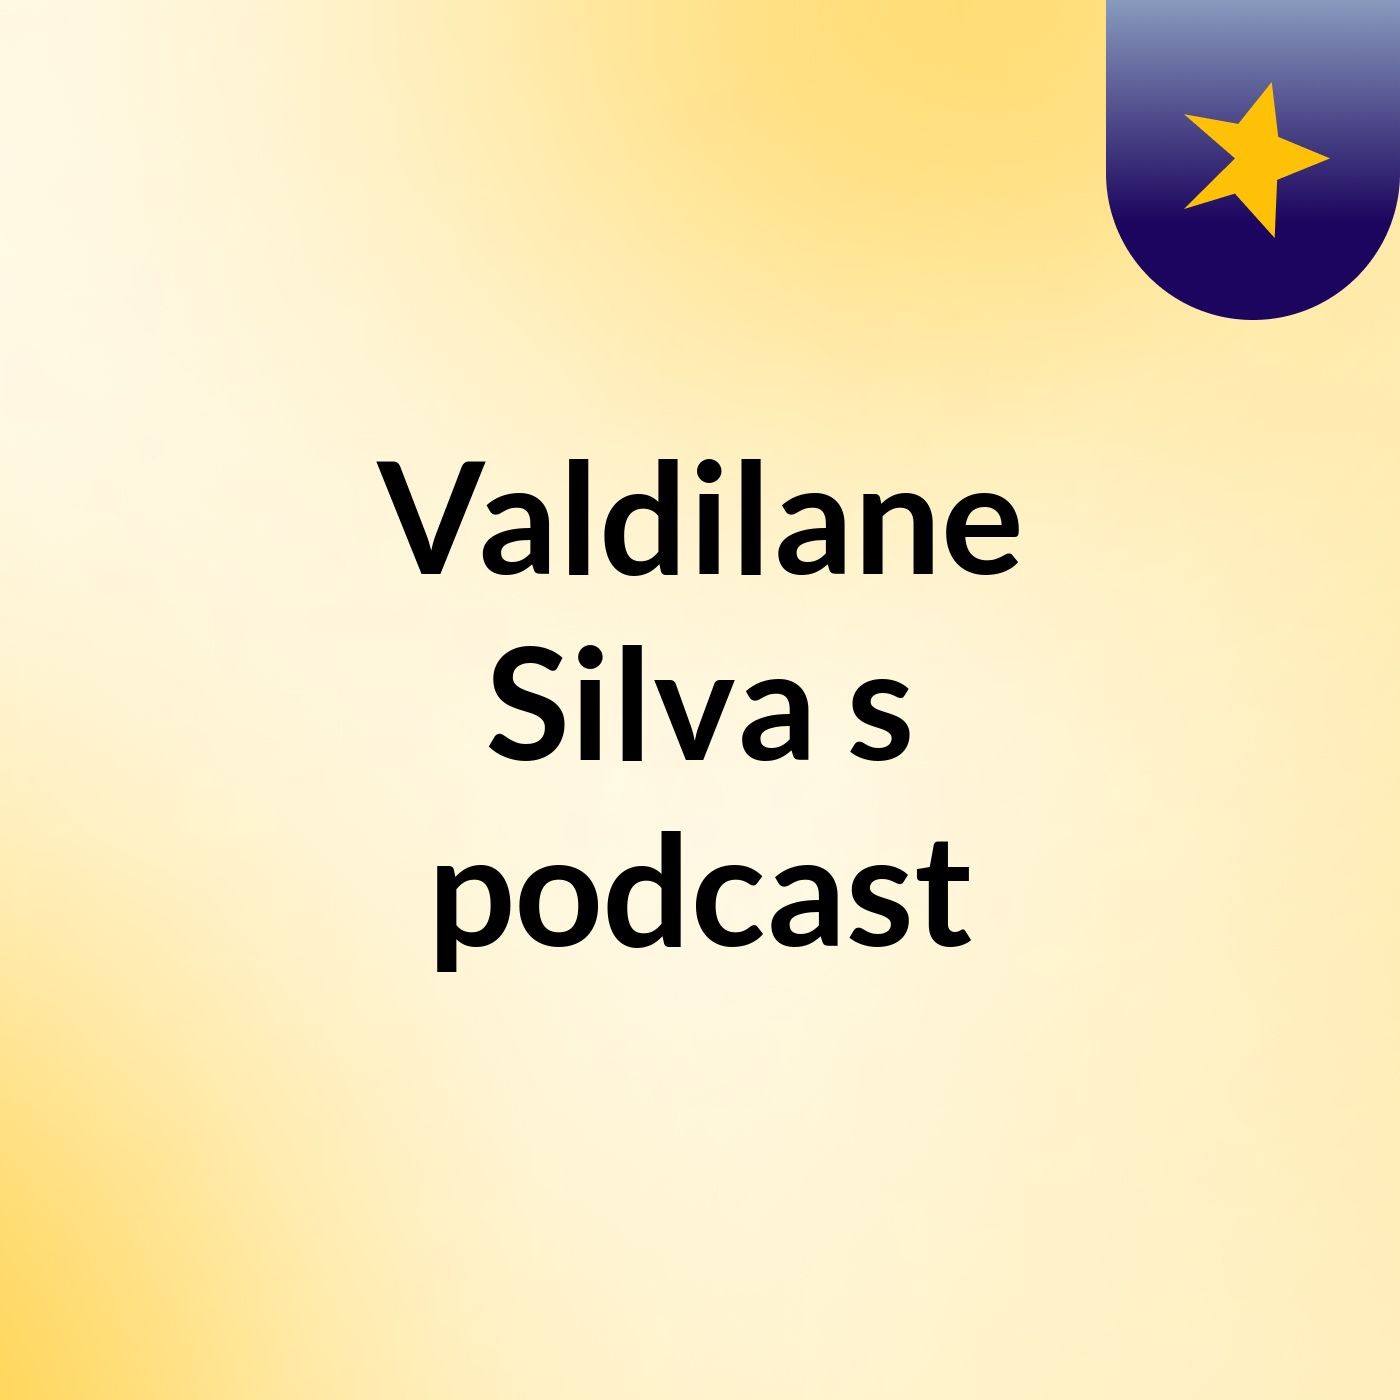 Valdilane Silva's podcast